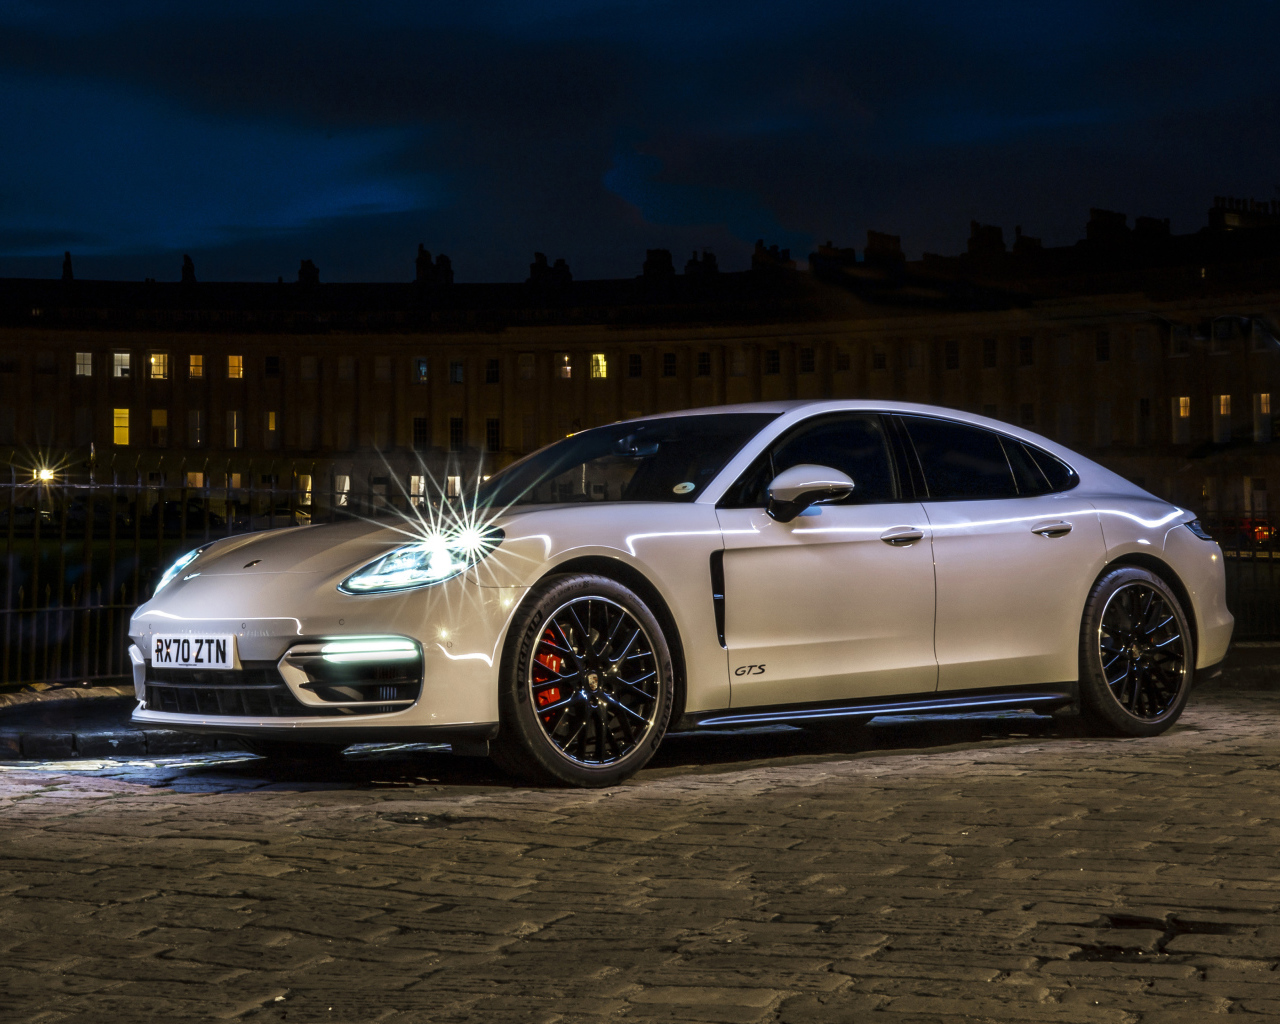 2020 Porsche Panamera GTS car on the street at night